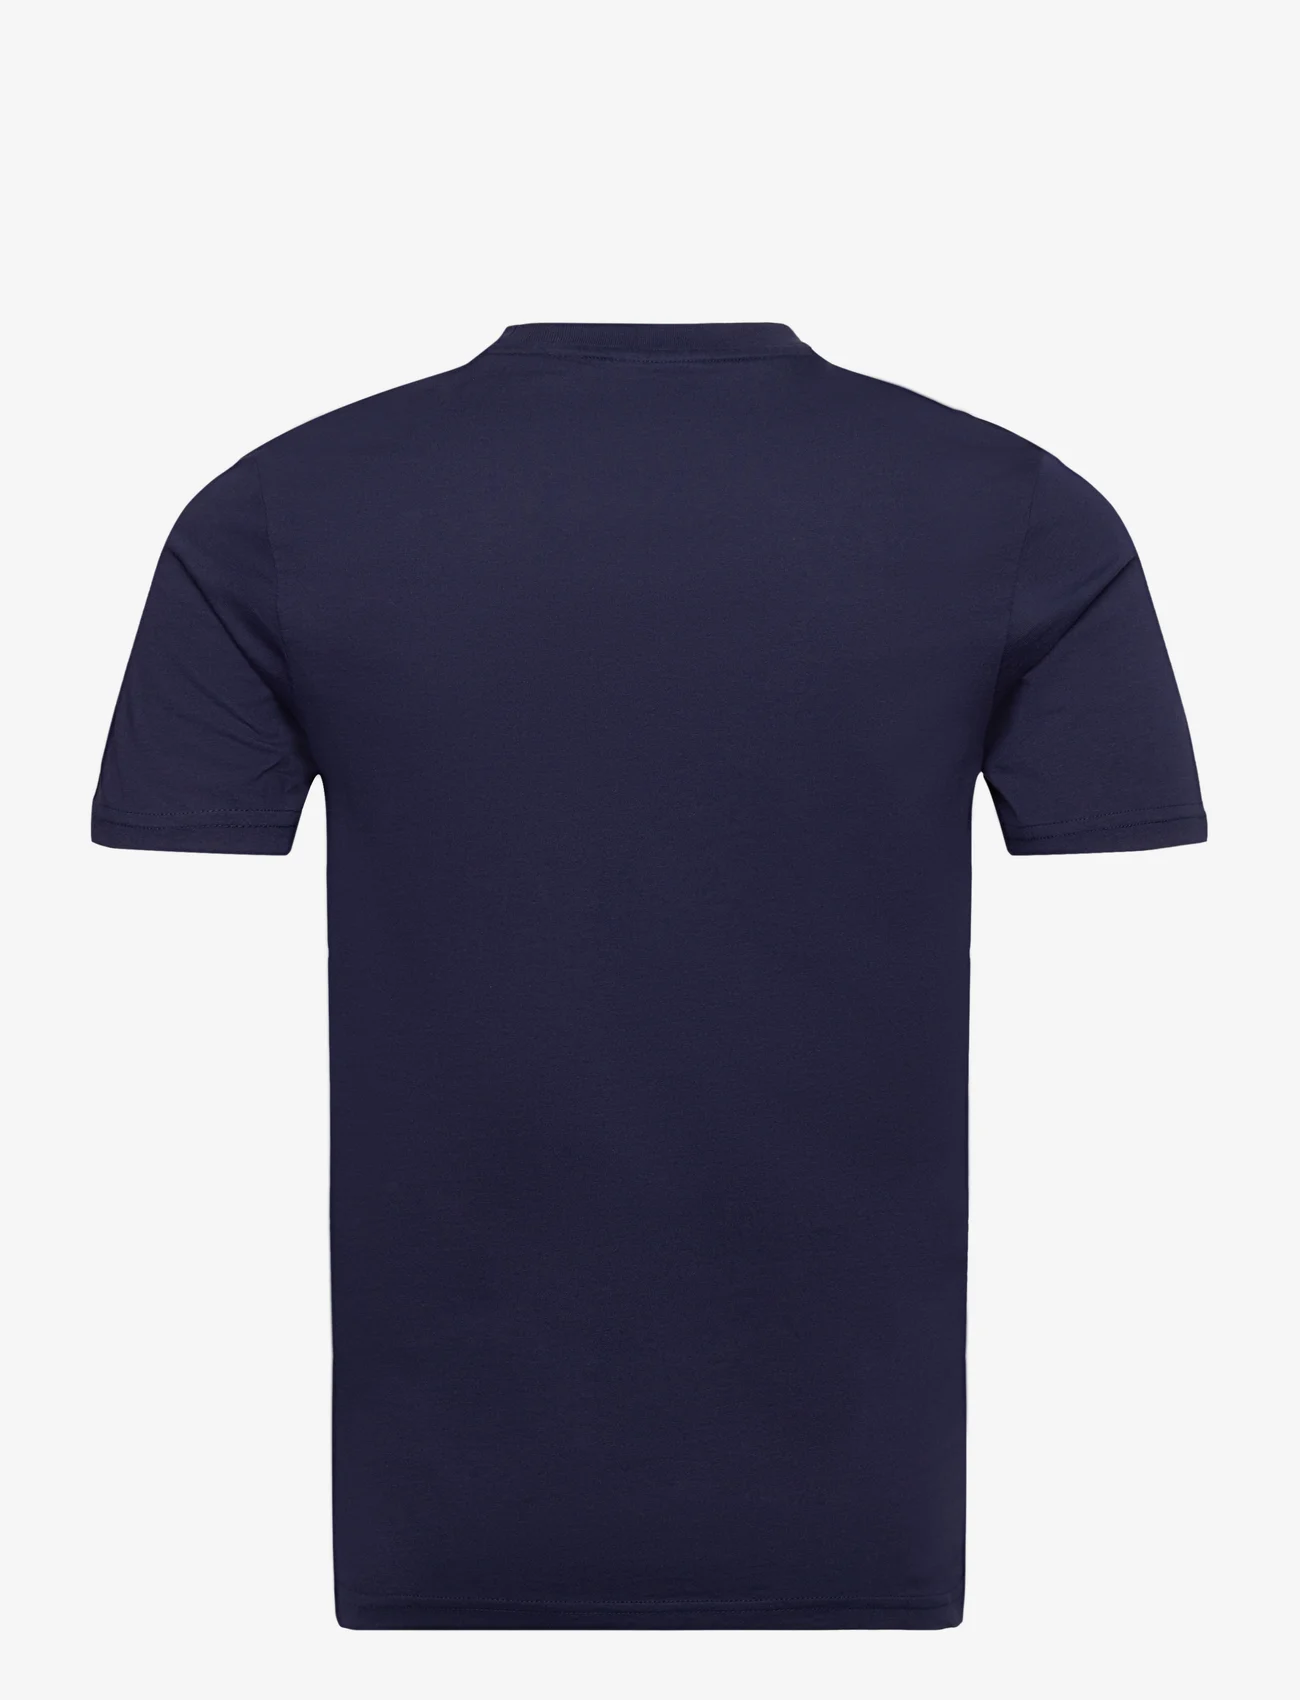 Lyle & Scott - Collegiate T-Shirt - laagste prijzen - z99 navy - 1